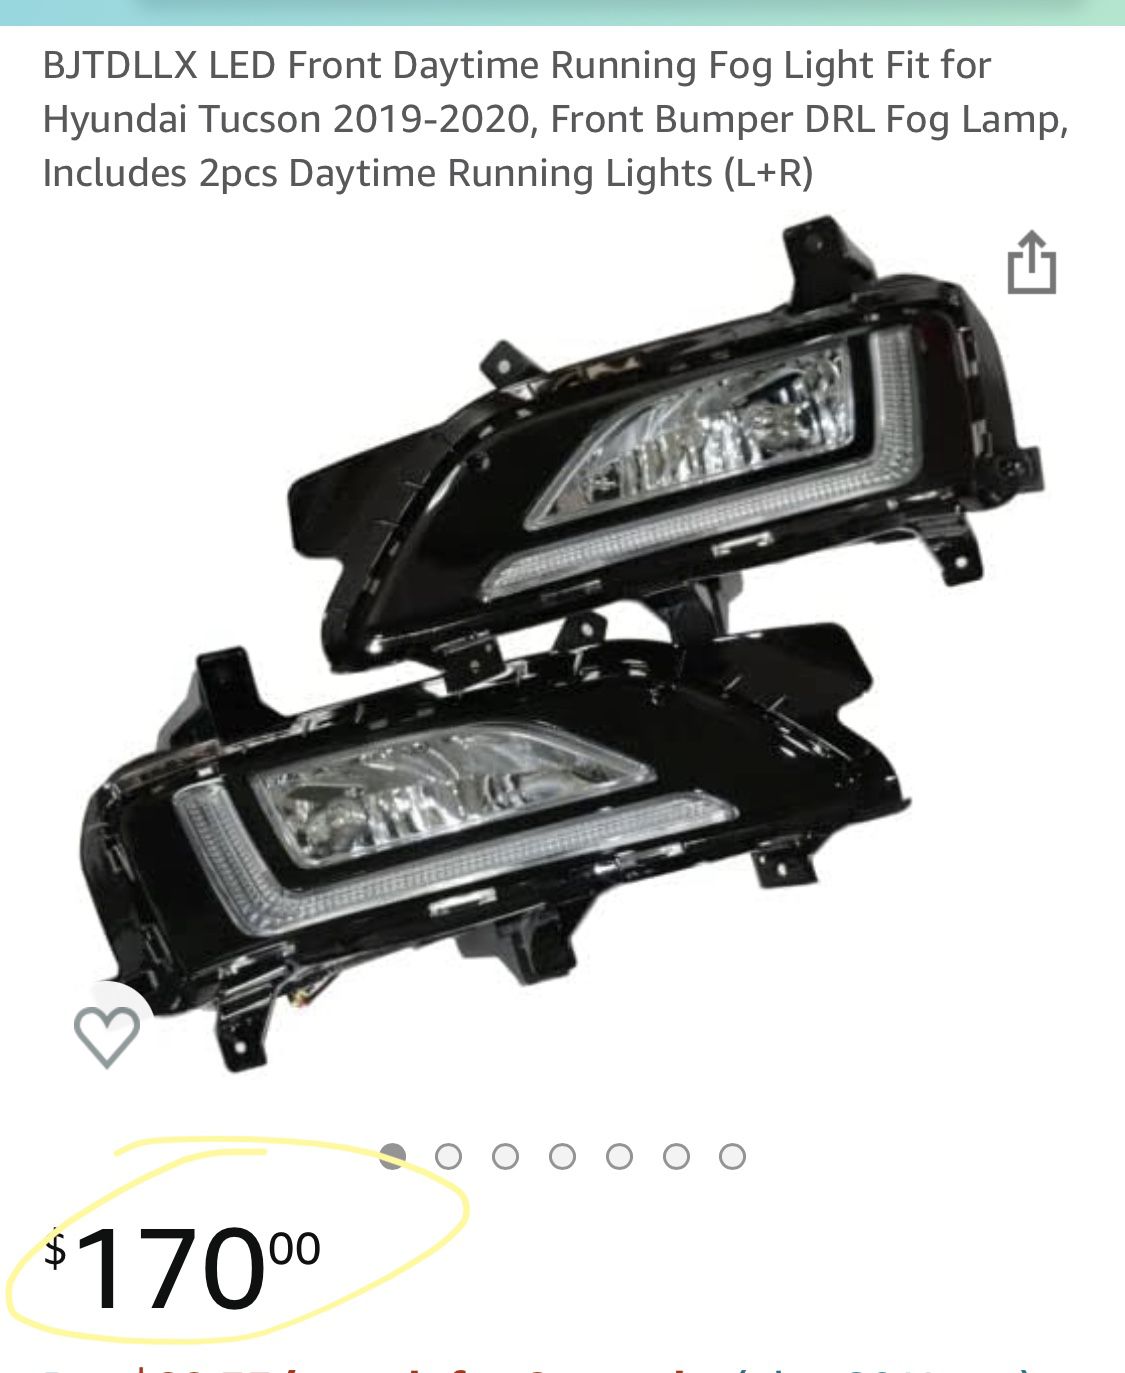 BJTDLLX LED Front Daytime Running Fog Light Fit for Hyundai Tucson 2019-2020, Front Bumper DRL Fog Lamp, Includes 2pcs Daytime Running Lights (L+R)